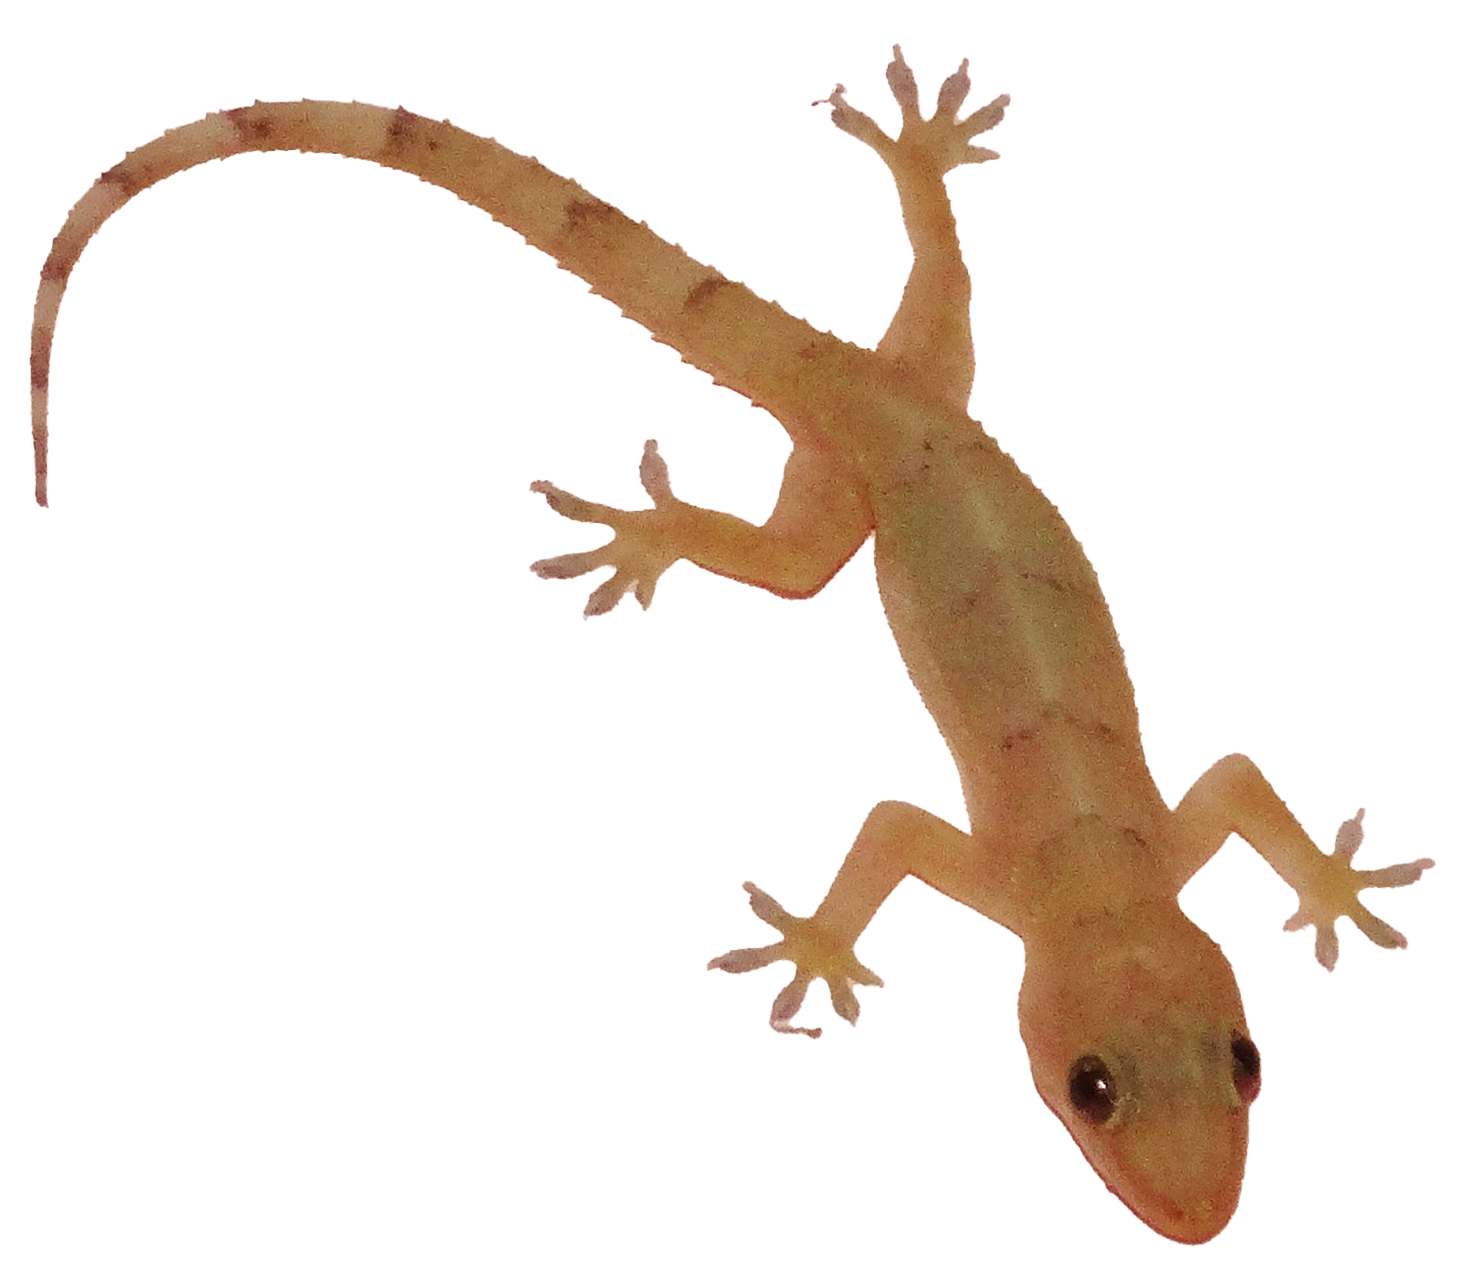 Lizard PNG HD Image